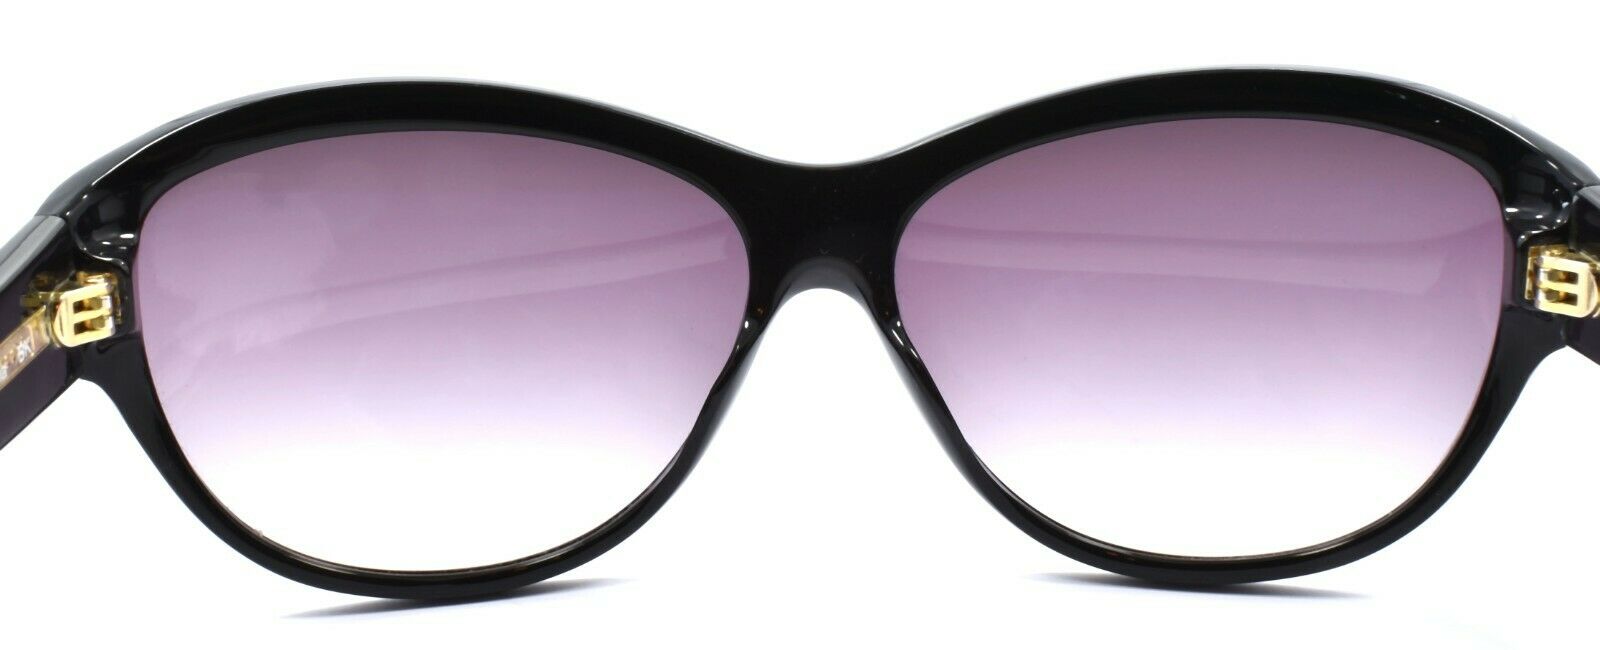 4-Oliver Peoples Cavanna BK Women's Sunglasses Black / Purple Gradient JAPAN Y-Does not apply-IKSpecs